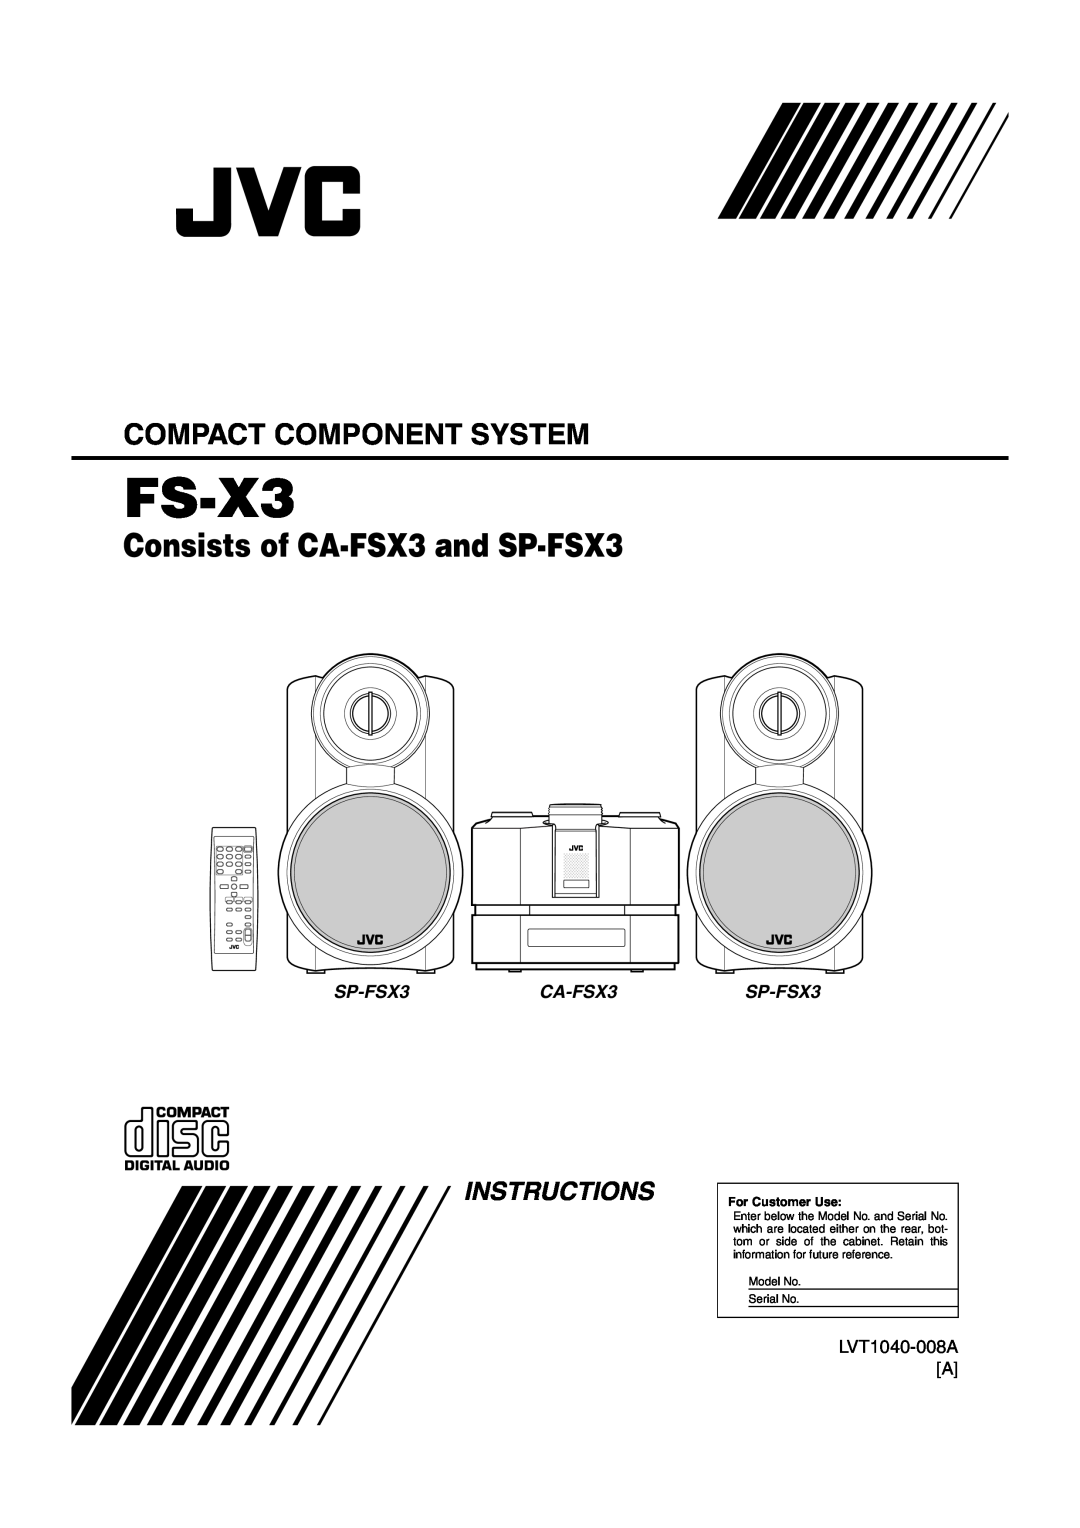 JVC LVT1040-008A manual SP-FSX3CA-FSX3, FS-X3, Consists of CA-FSX3and SP-FSX3, Compact Component System, Instructions 